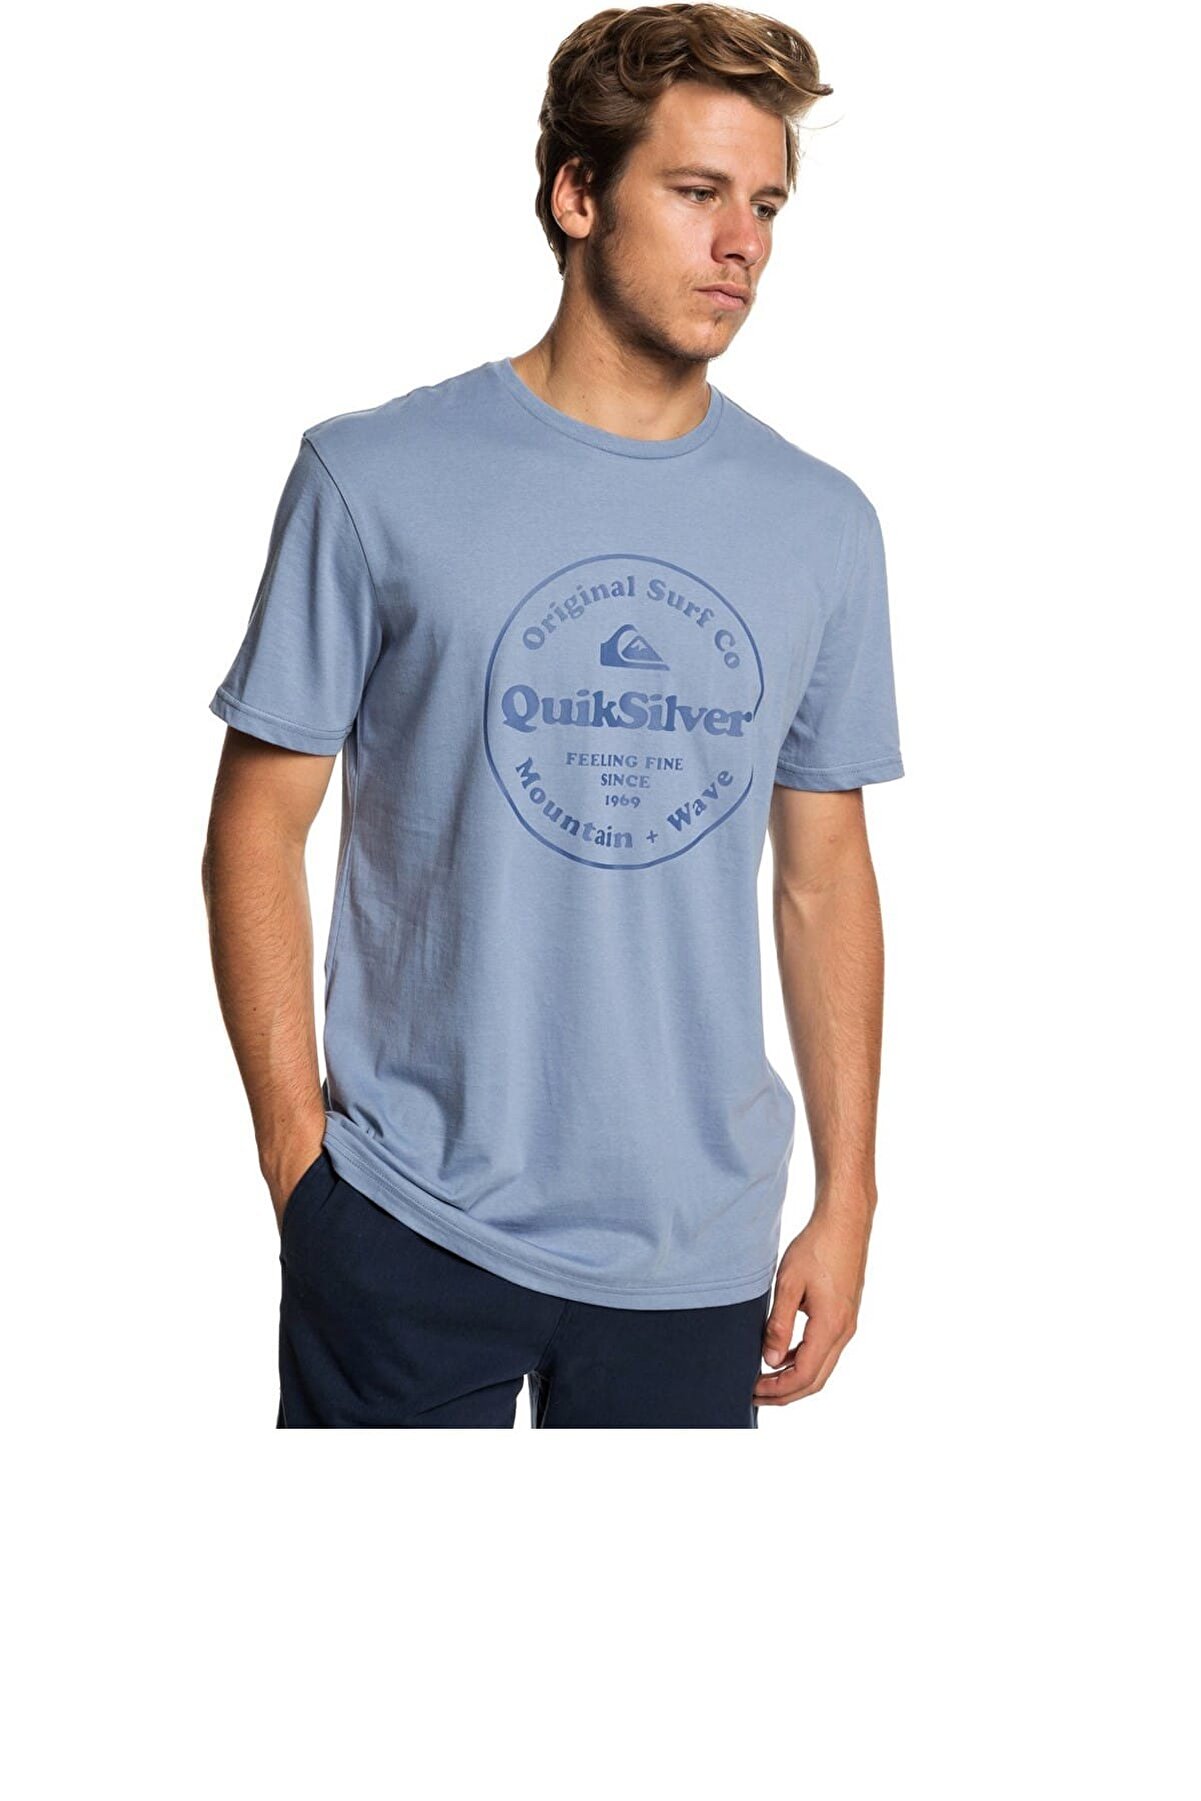 Quiksilver SCRTINGREDIENSS M TEES Açık Mavi Erkek T-Shirt 100415738